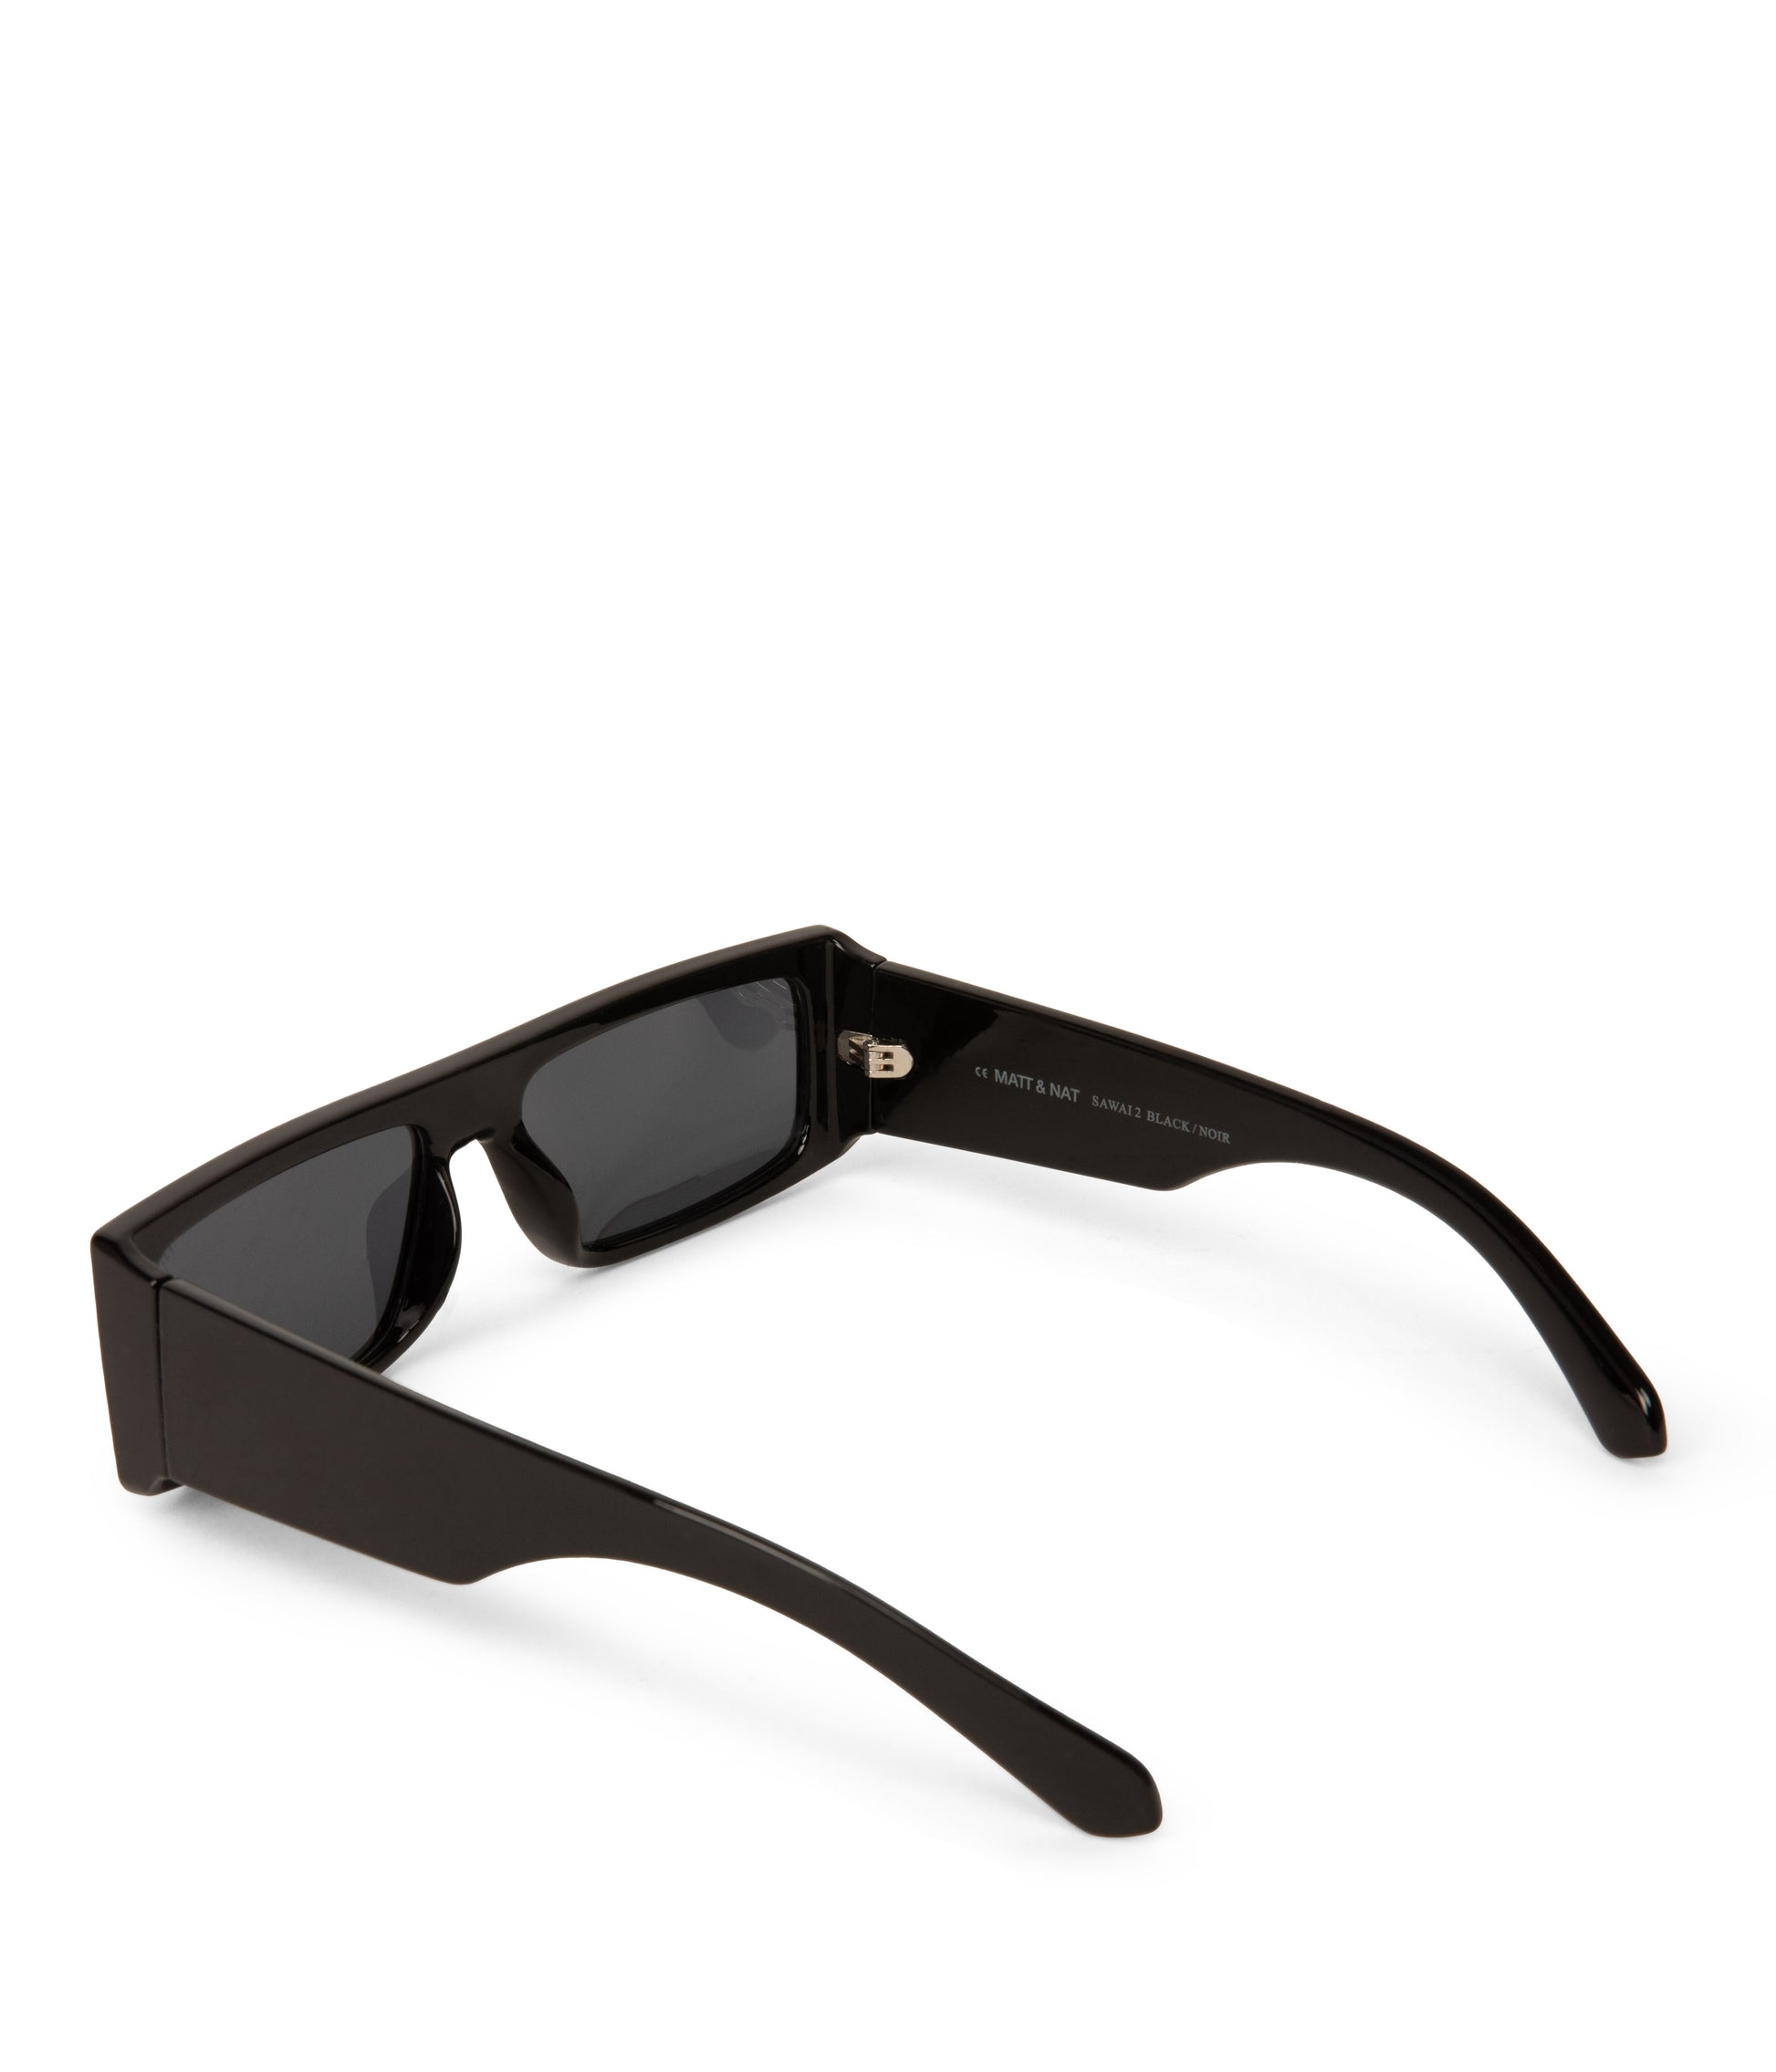 SAWAI-2 Recycled Rectangle Sunglasses | Color: Black, Grey - variant::black